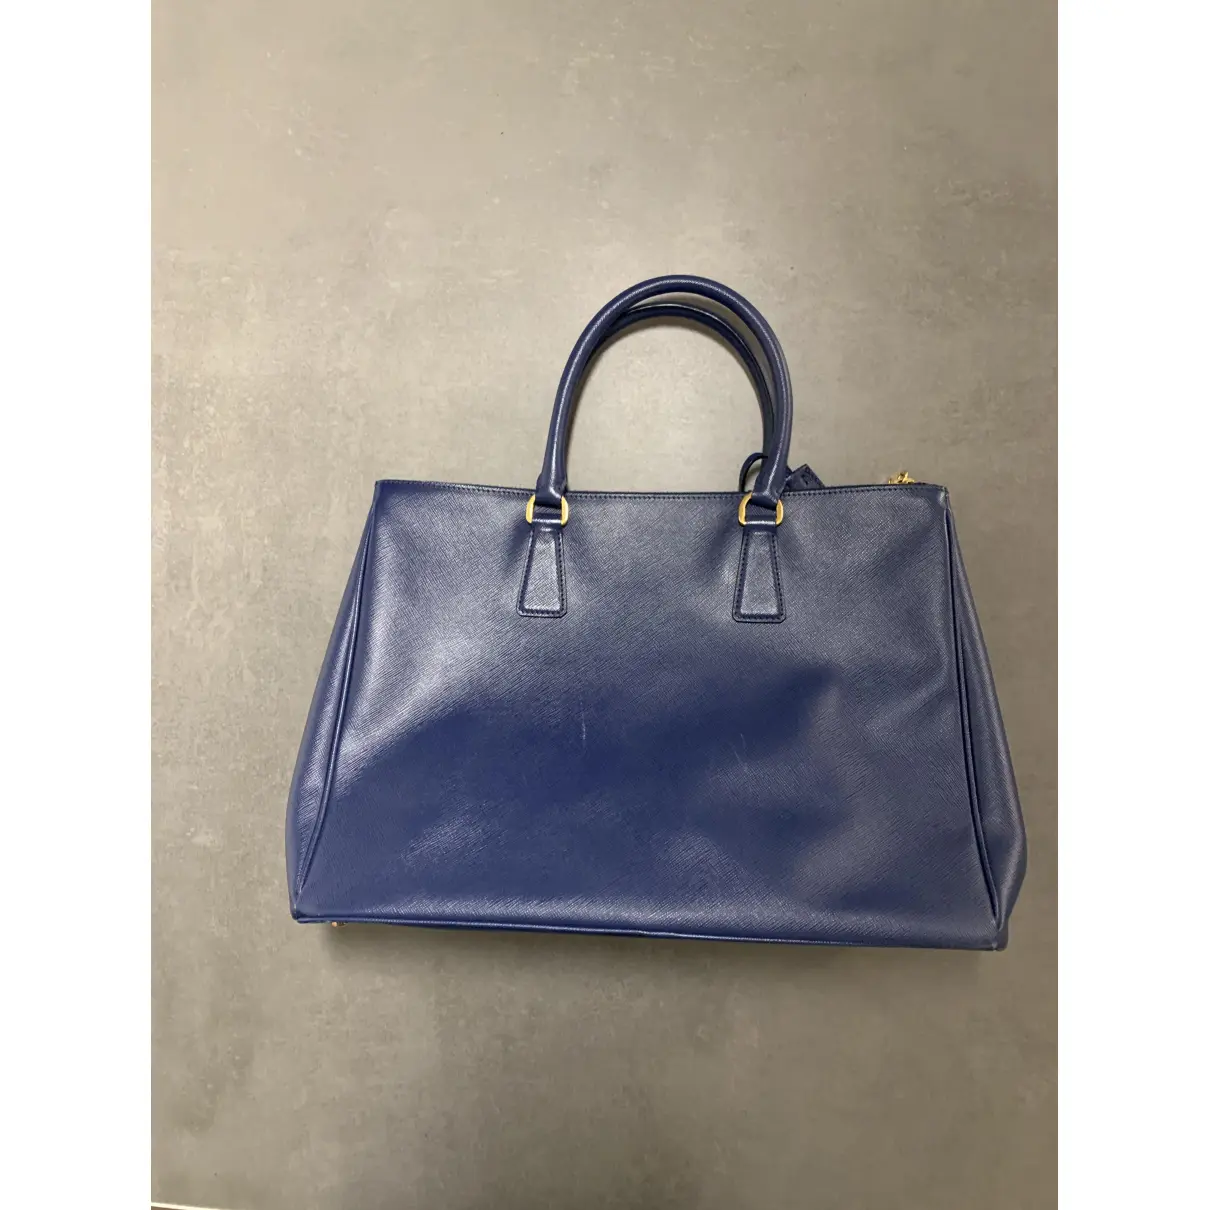 Buy Prada Saffiano  leather handbag online